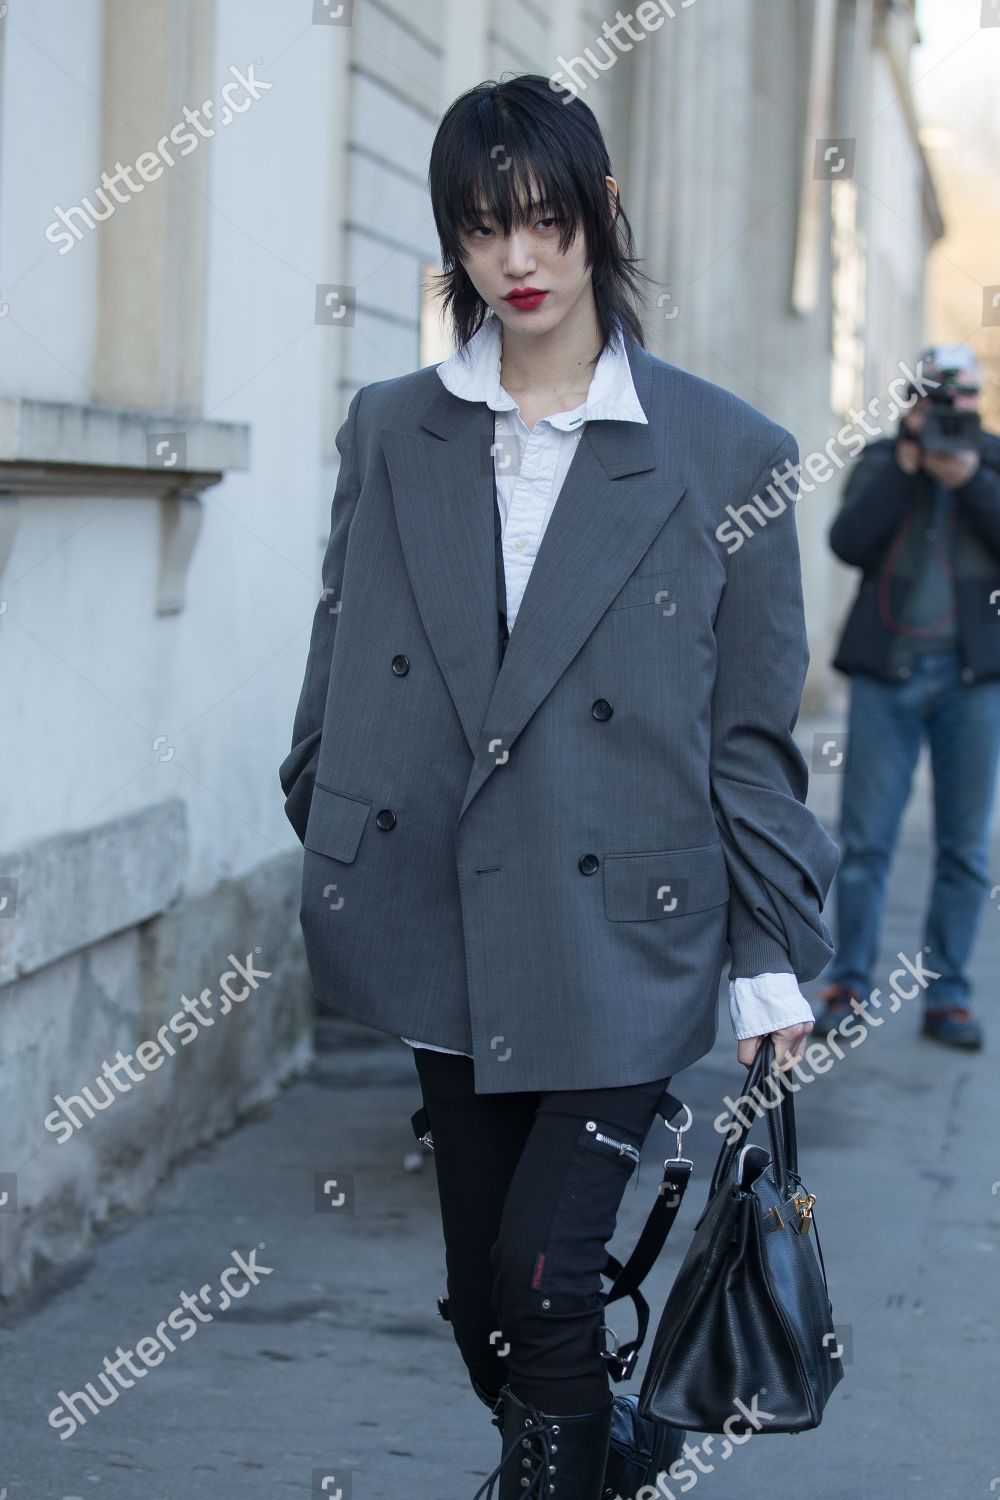 Sora Choi MFW Street Style Outfit